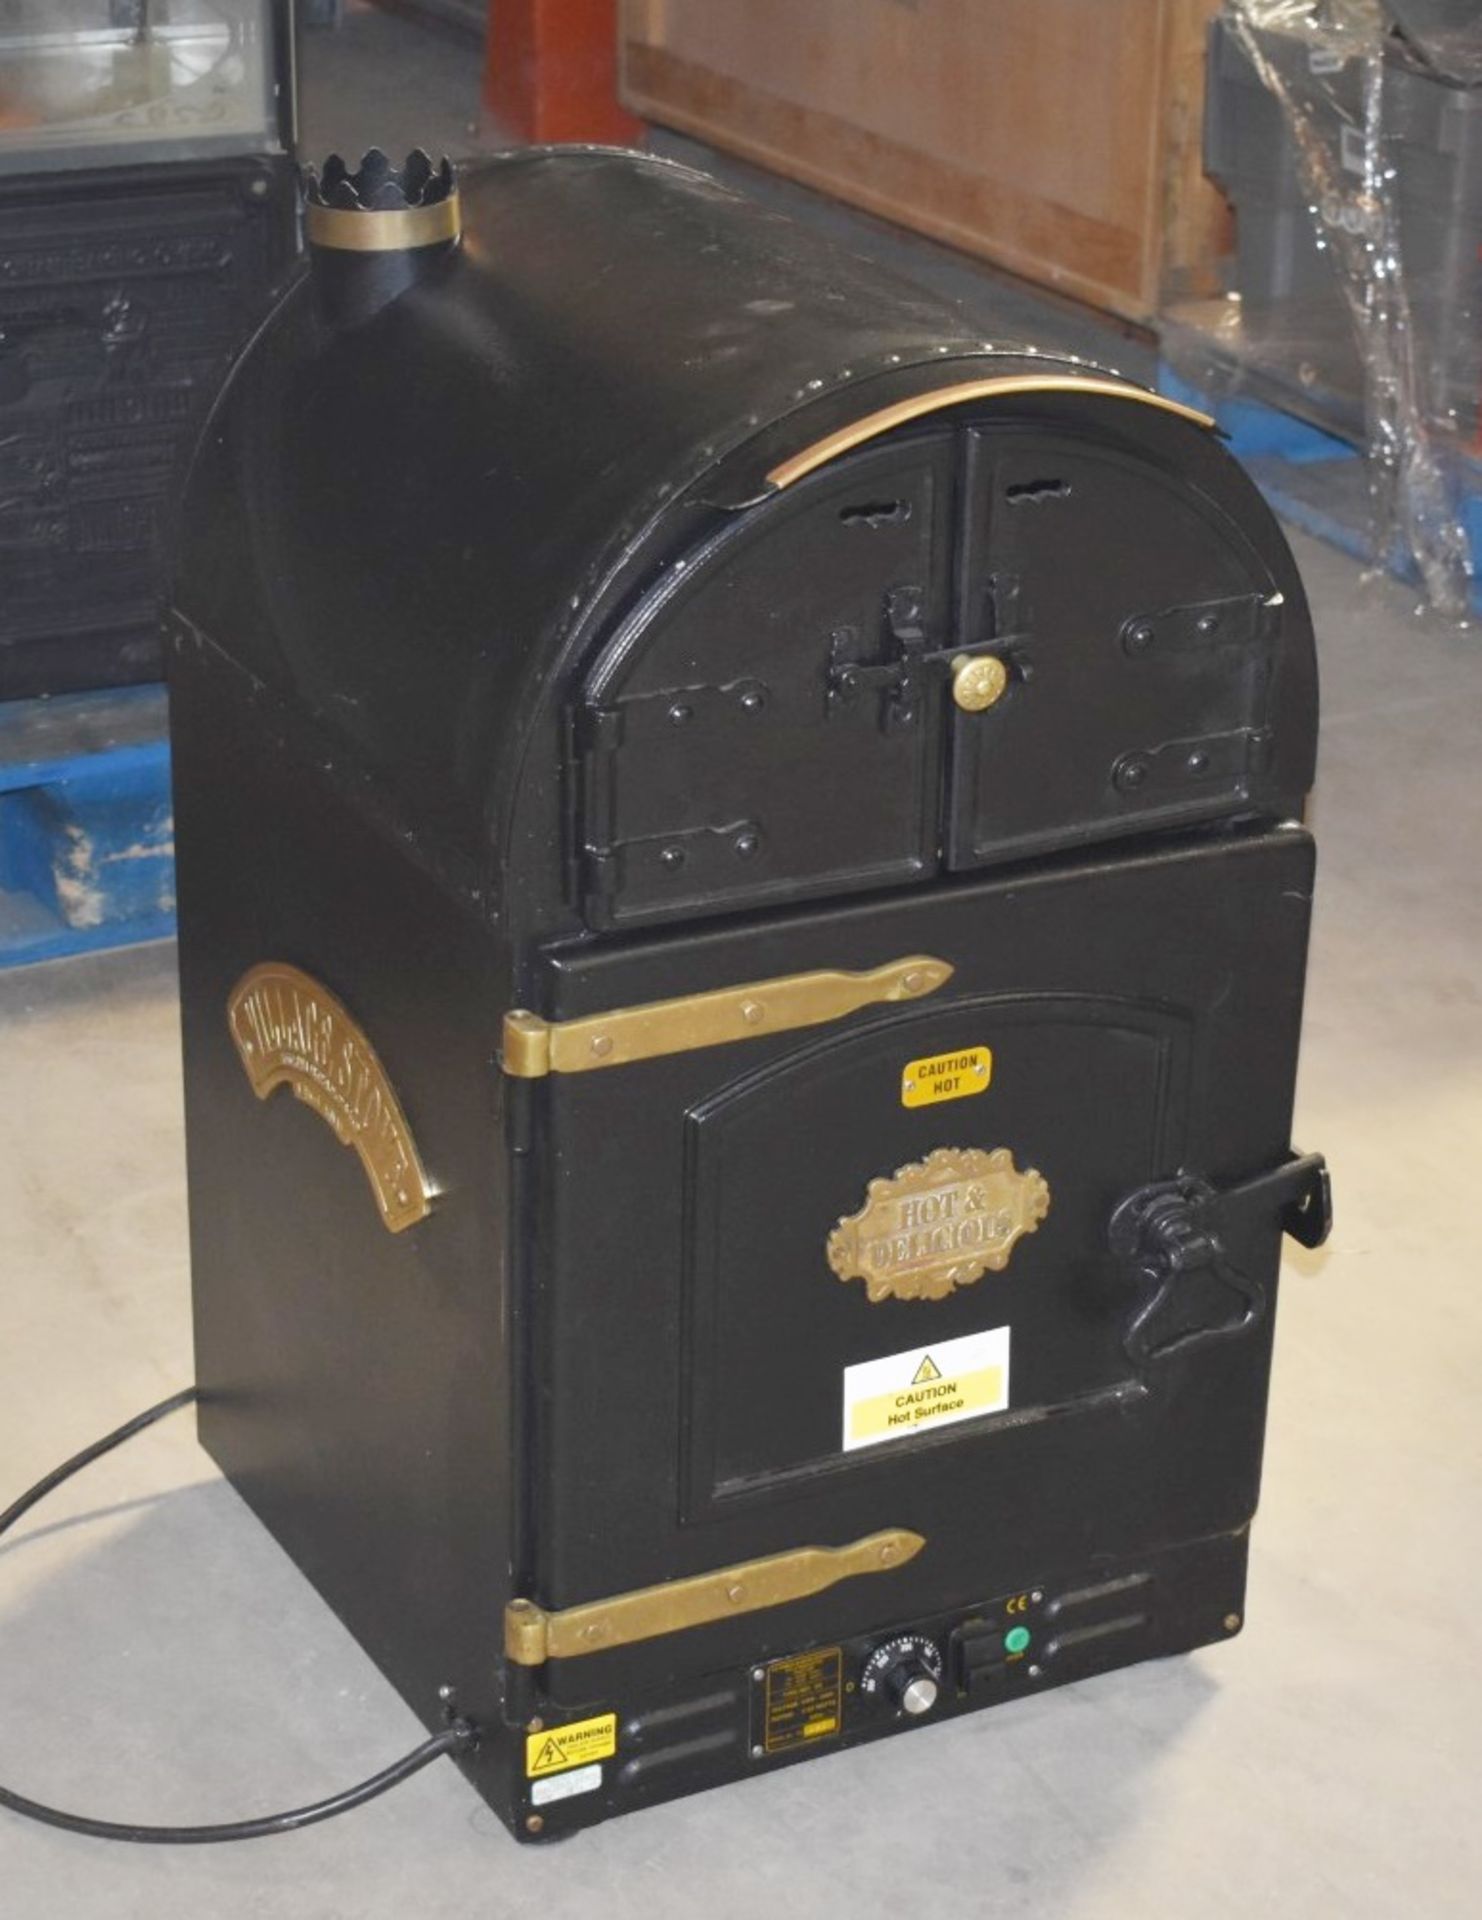 1 x Victorian Village Stove Potato Baking Oven - Model VS - 45 Potato Capacity - Approx RRP £2,600